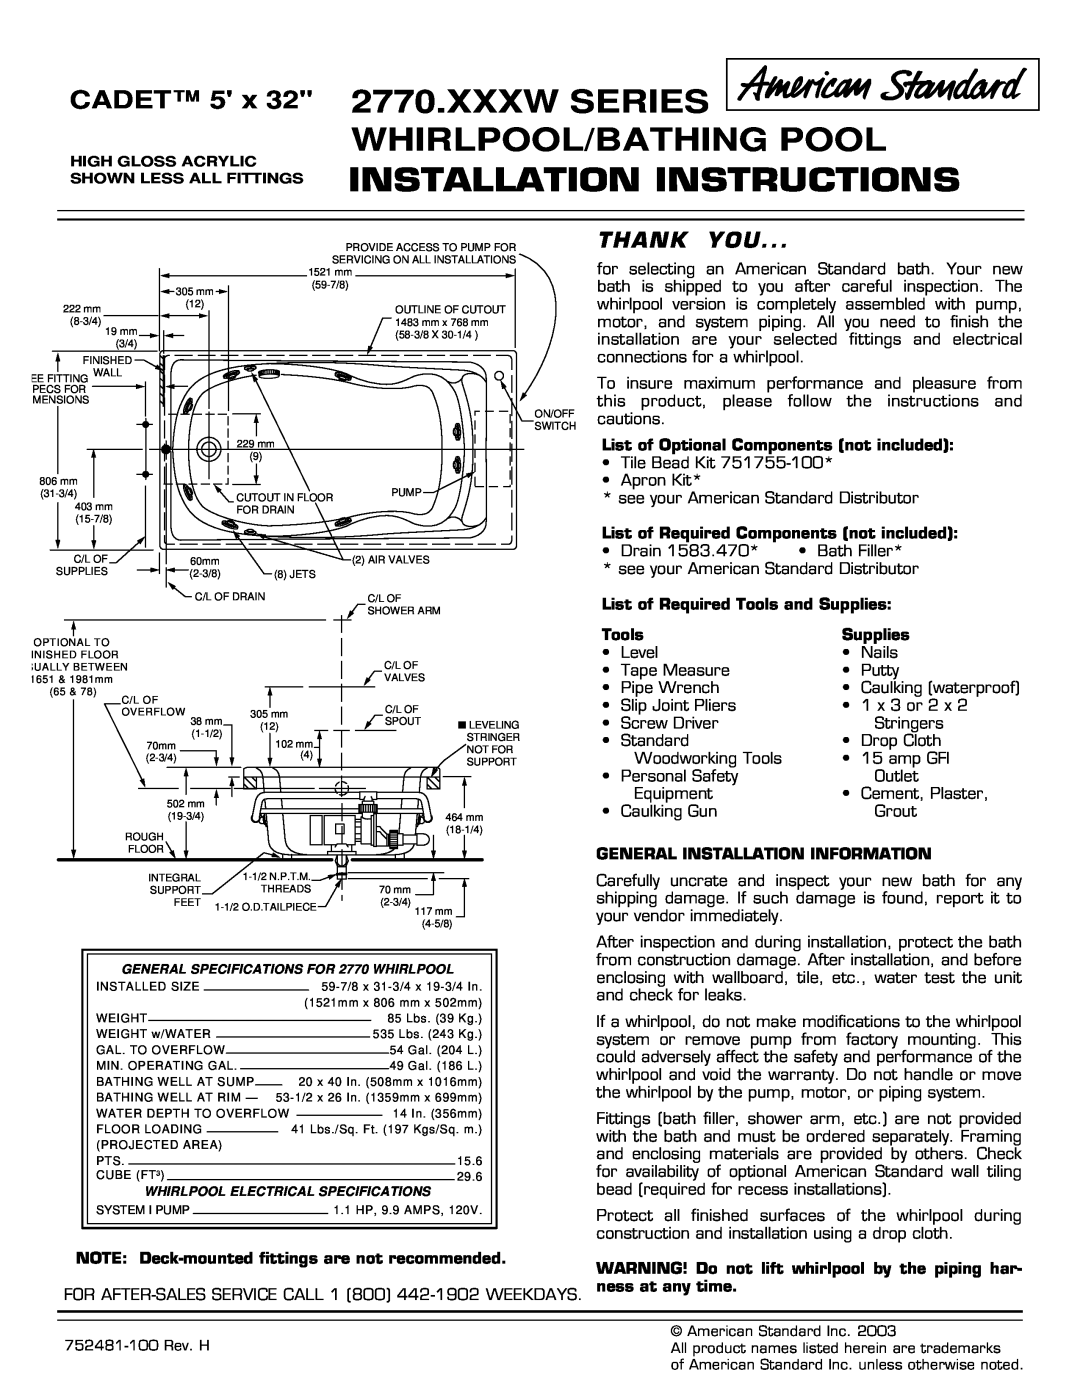 American Standard 2770.XXXW Series installation instructions Xxxw Series Whirlpool/Bathing Pool, Installation Instructions 